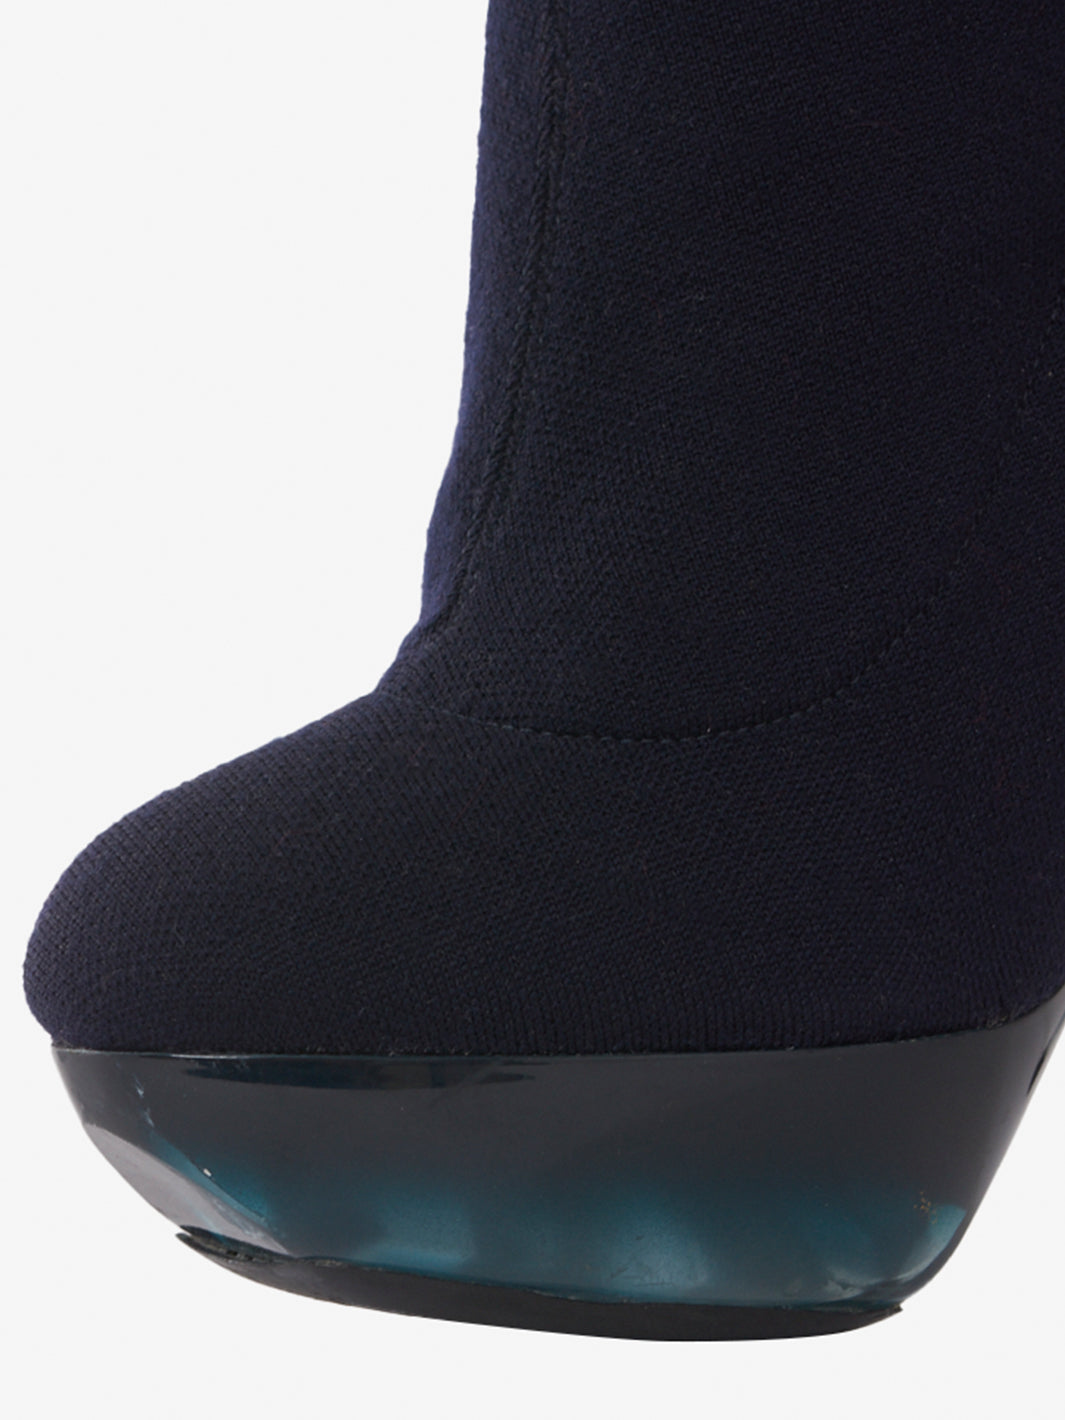 Jil Sander boot with black sock stretch fabric upper